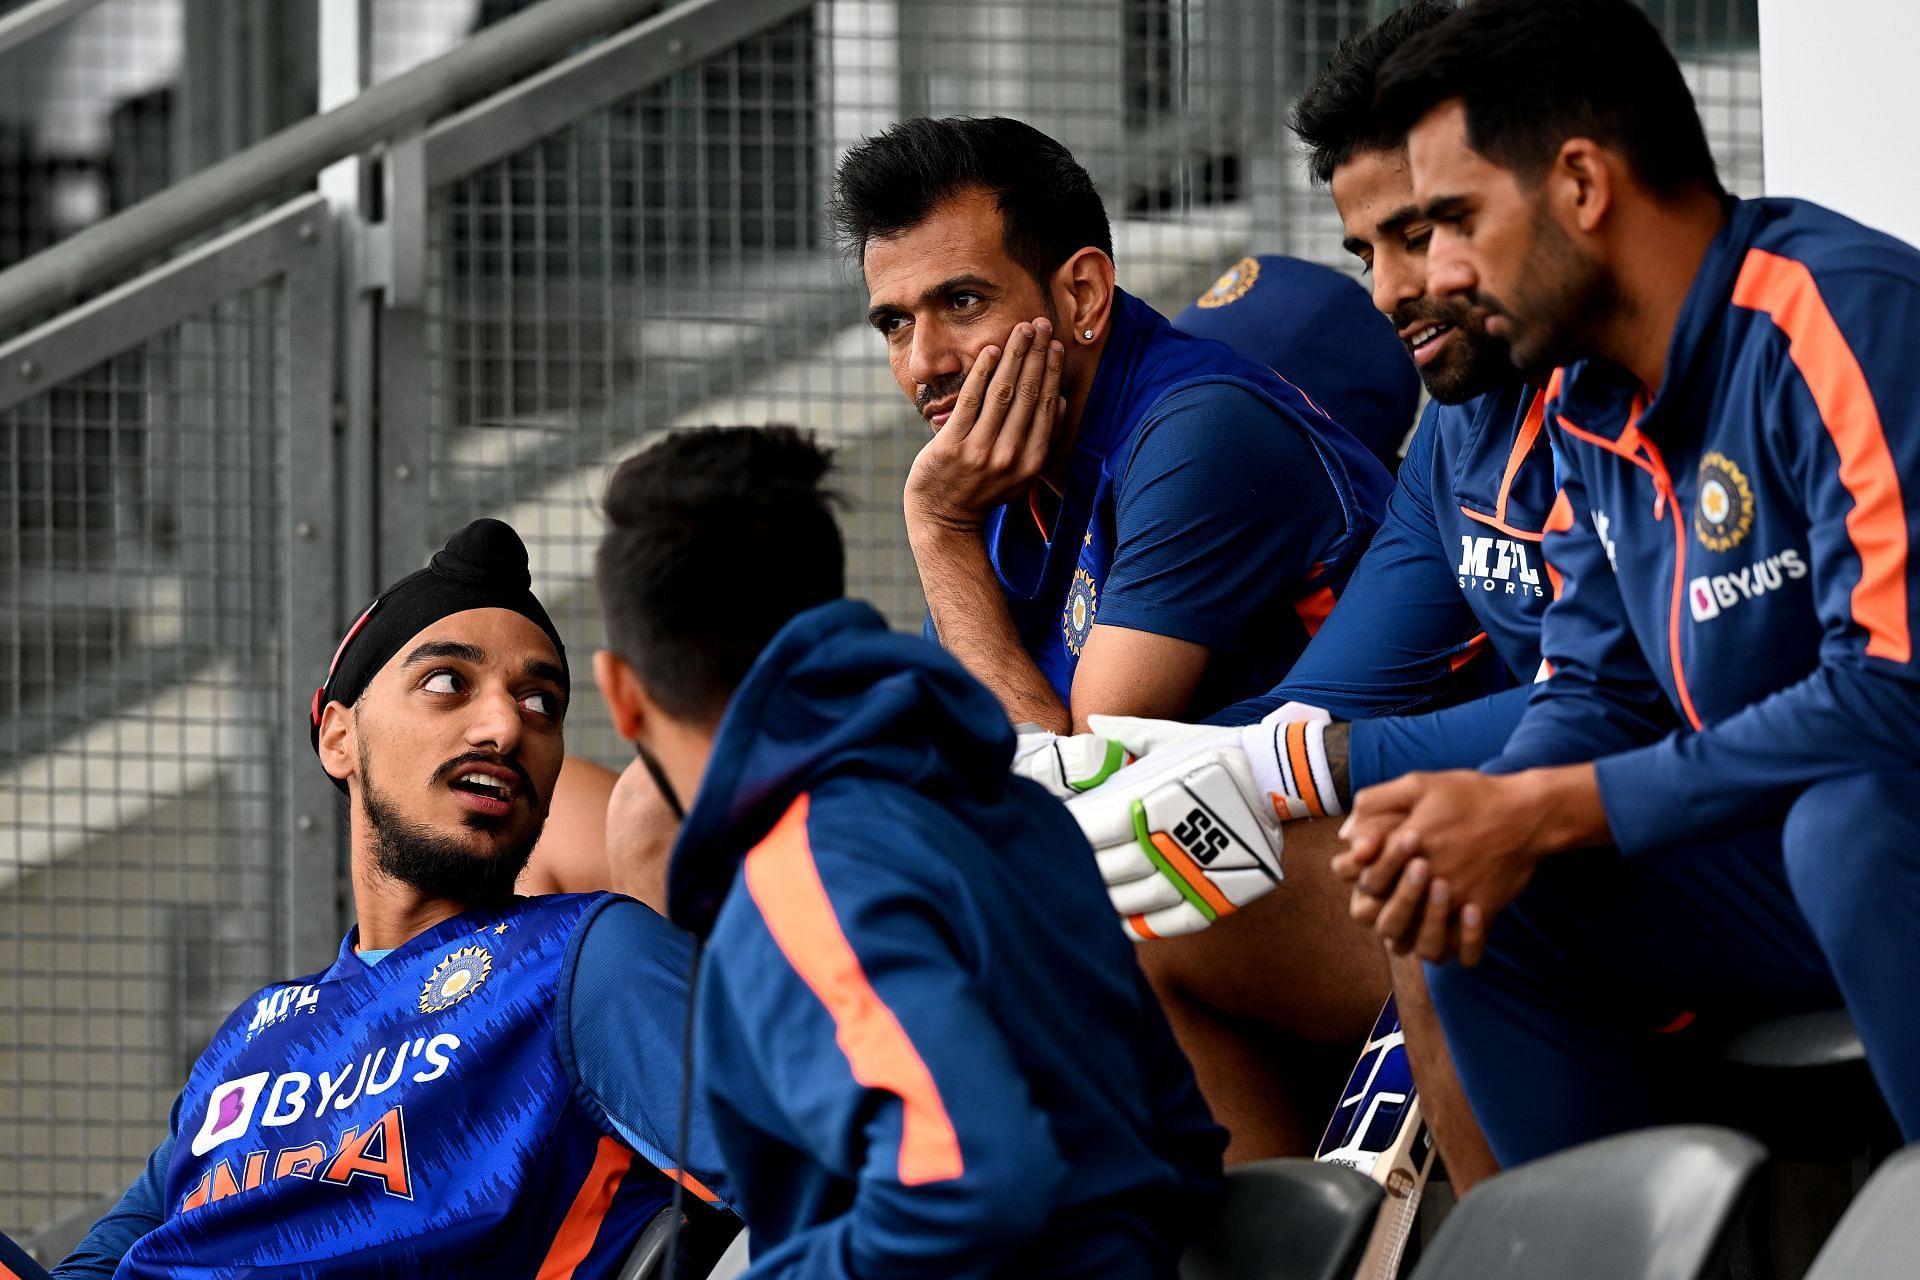 New Zealand v India - 3rd ODI